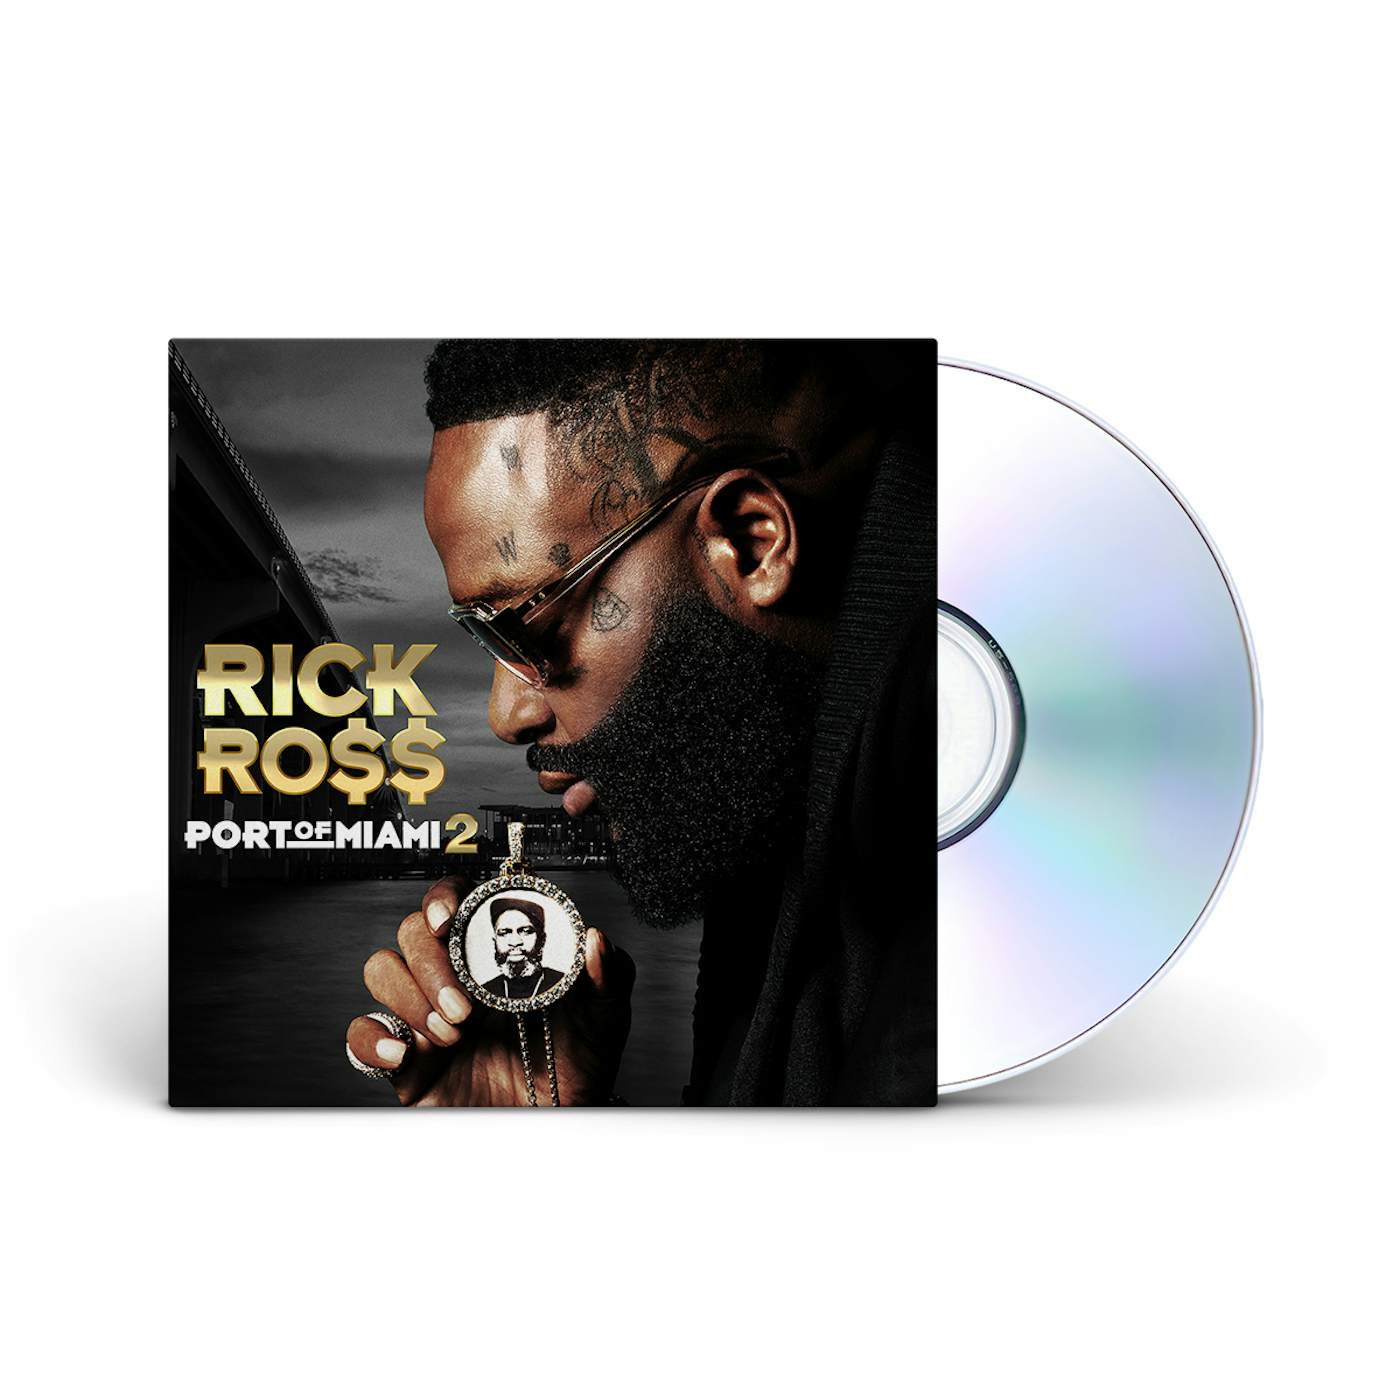 Rick Ross - "Port of Miami 2" CD